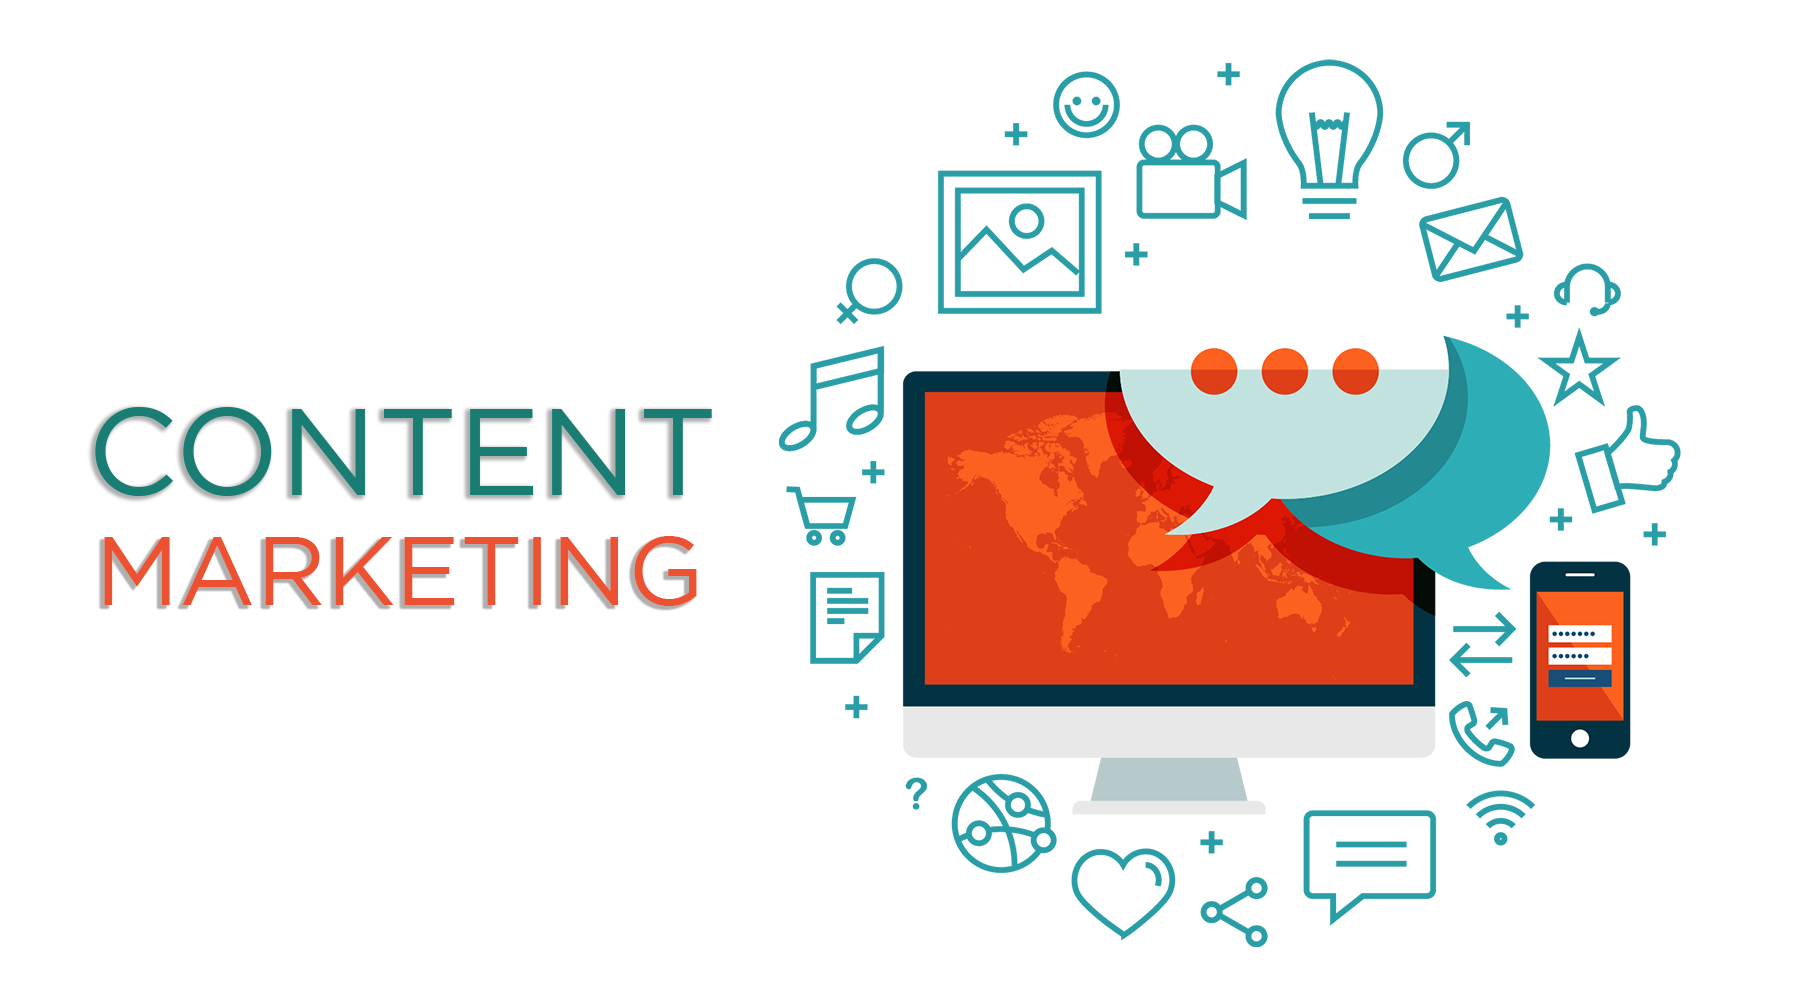 Content Marketing Services | Neubrain | Content Marketing Services